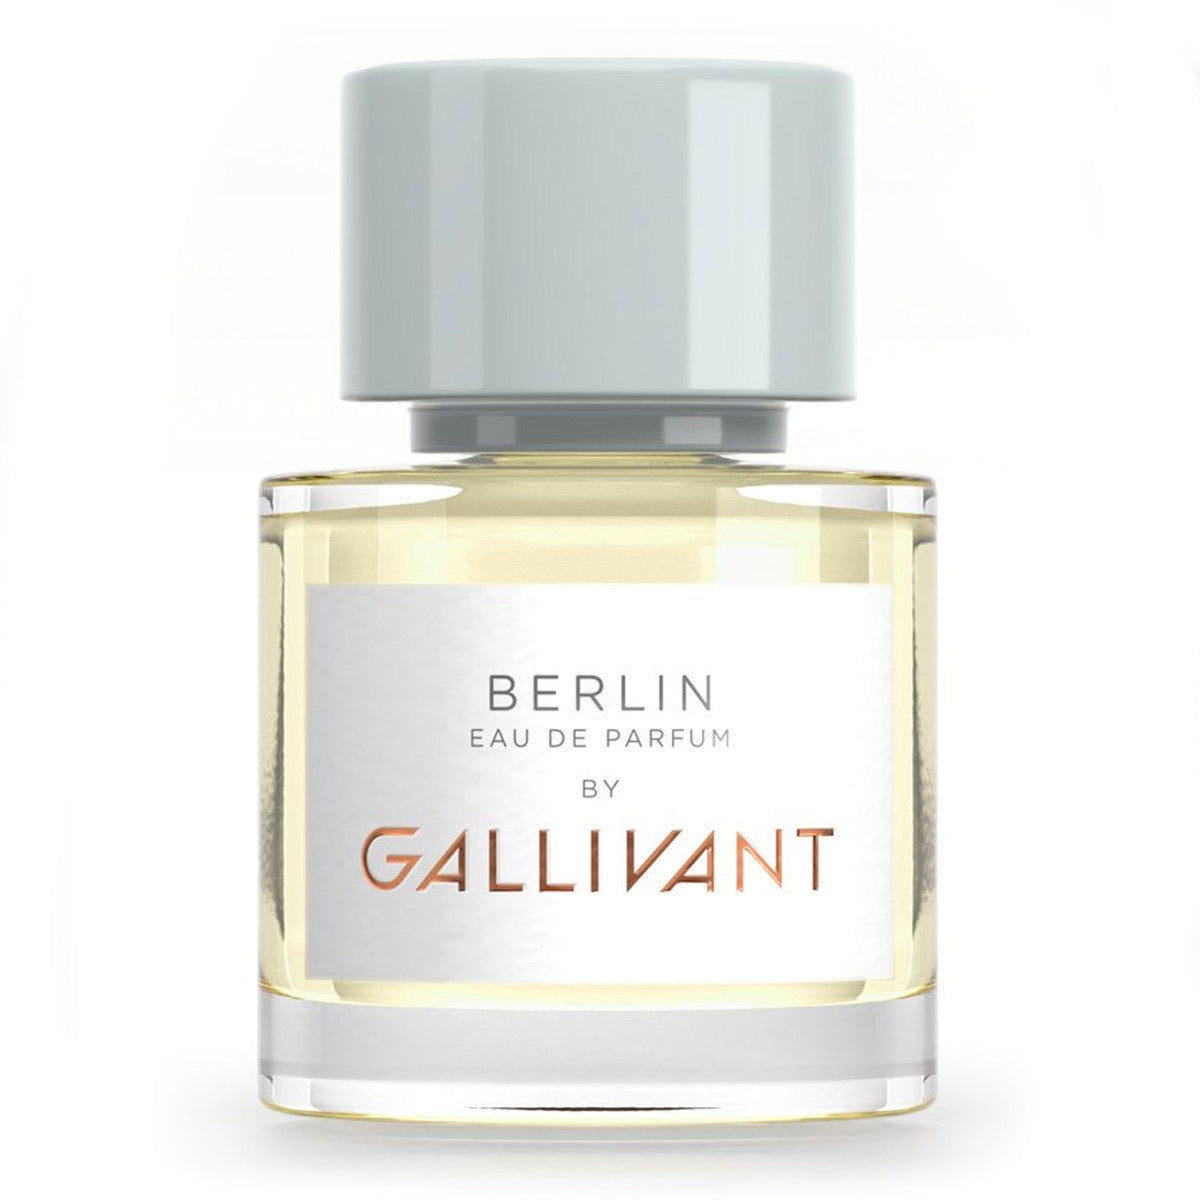 Primary image of Berlin Eau de Parfum